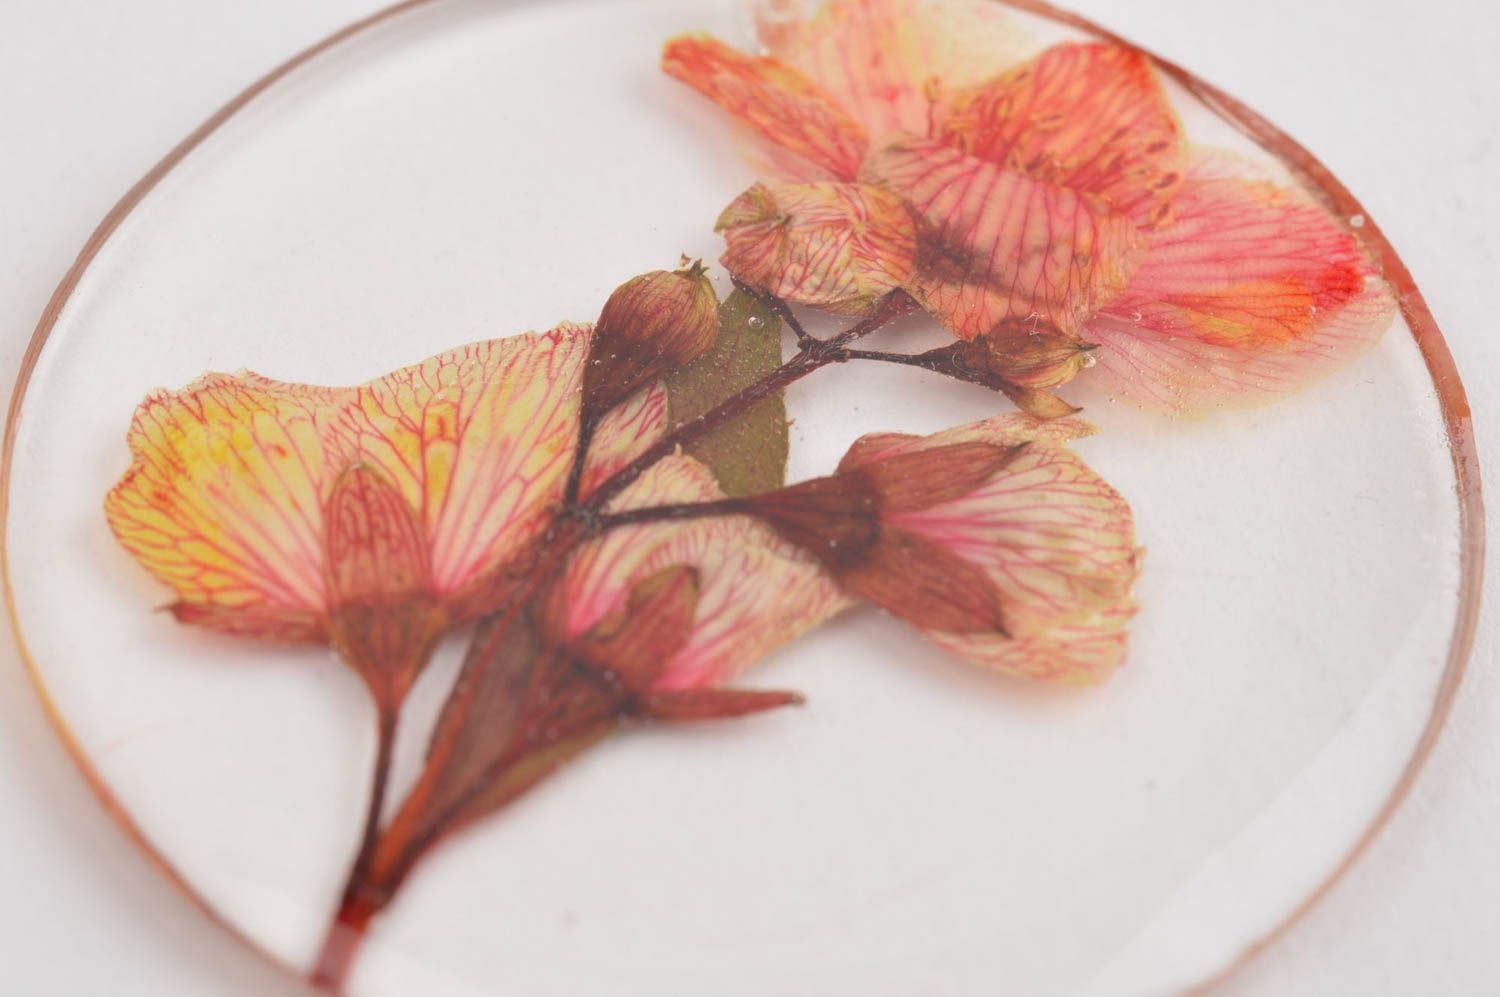 Stylish handmade botanical pendant dried flowers pendant cool jewelry designs photo 5